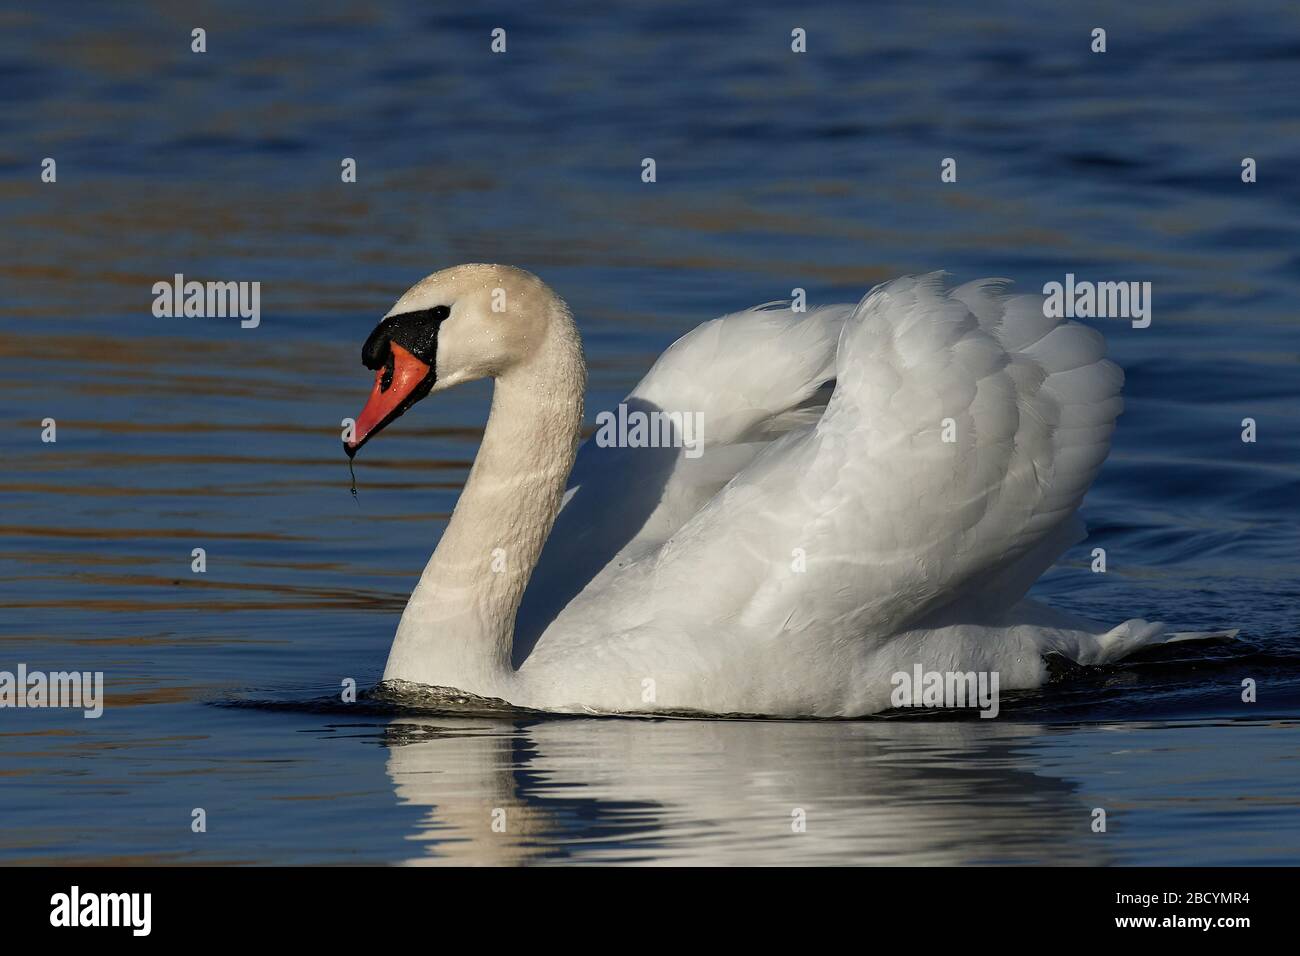 Mute swan in aggressive posture in its habitat Stock Photo